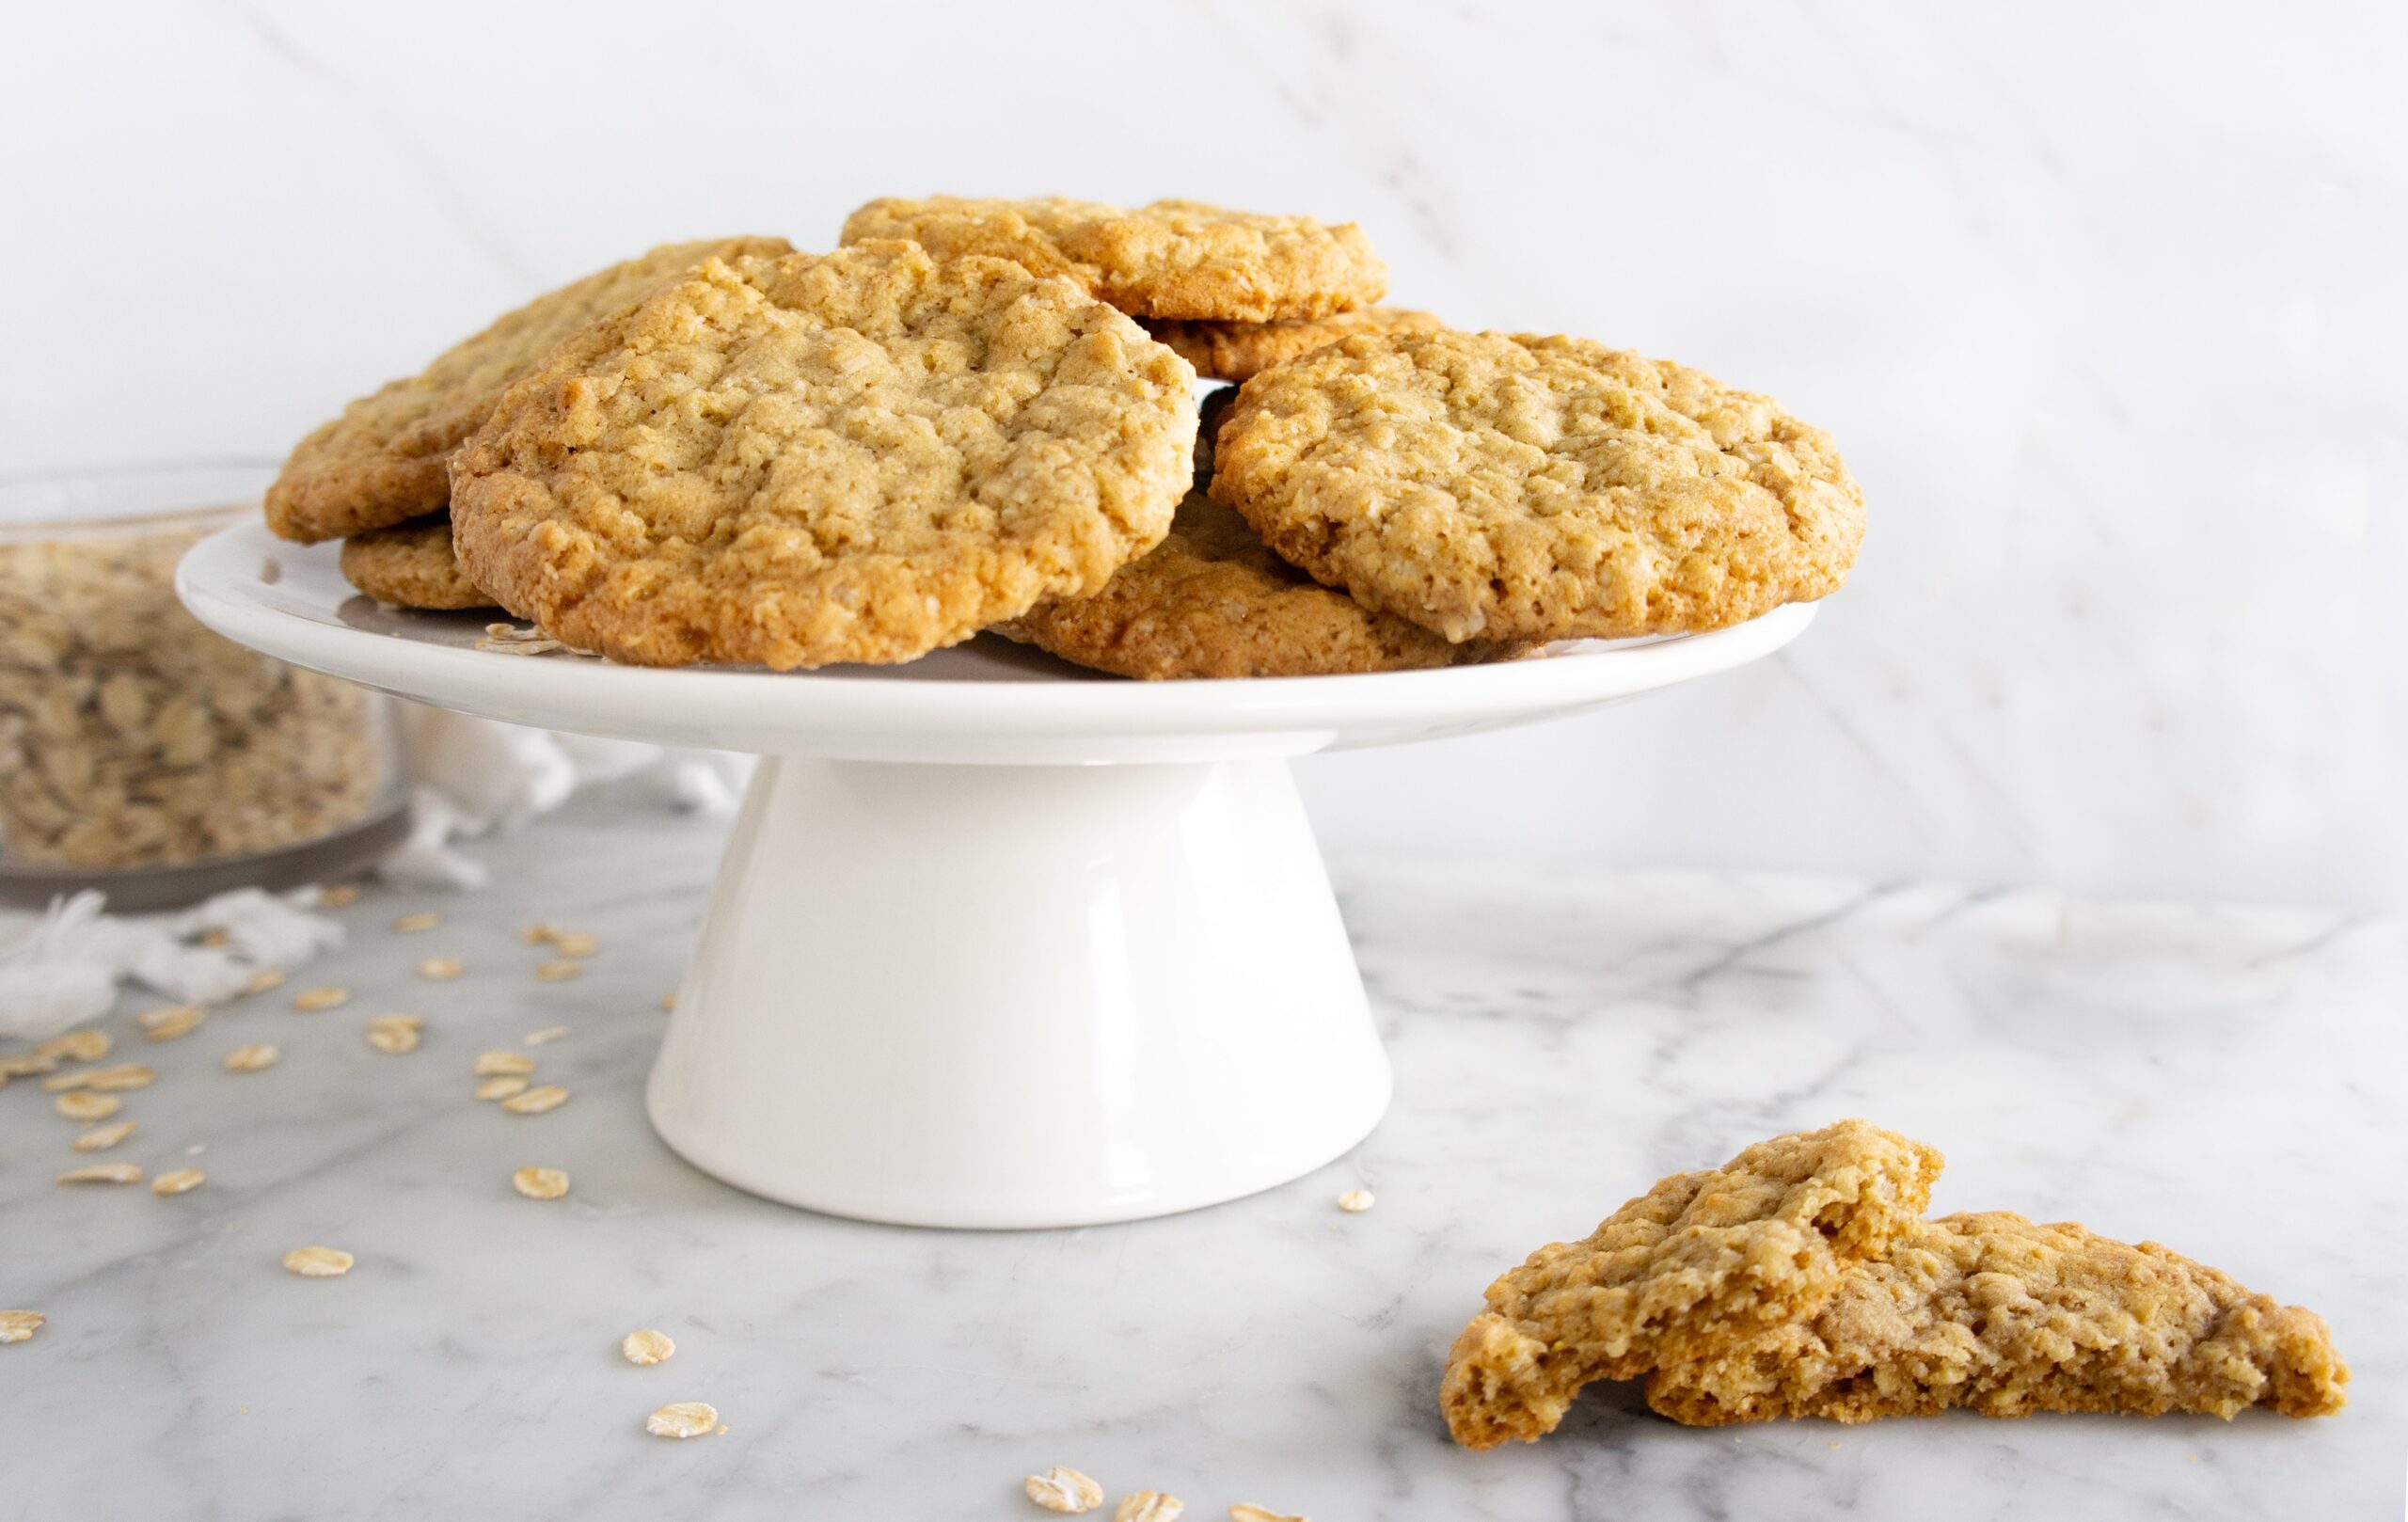 https://owlbbaking.com/wp-content/uploads/2020/07/The-Best-Oatmeal-Cookies-use-min-scaled.jpg